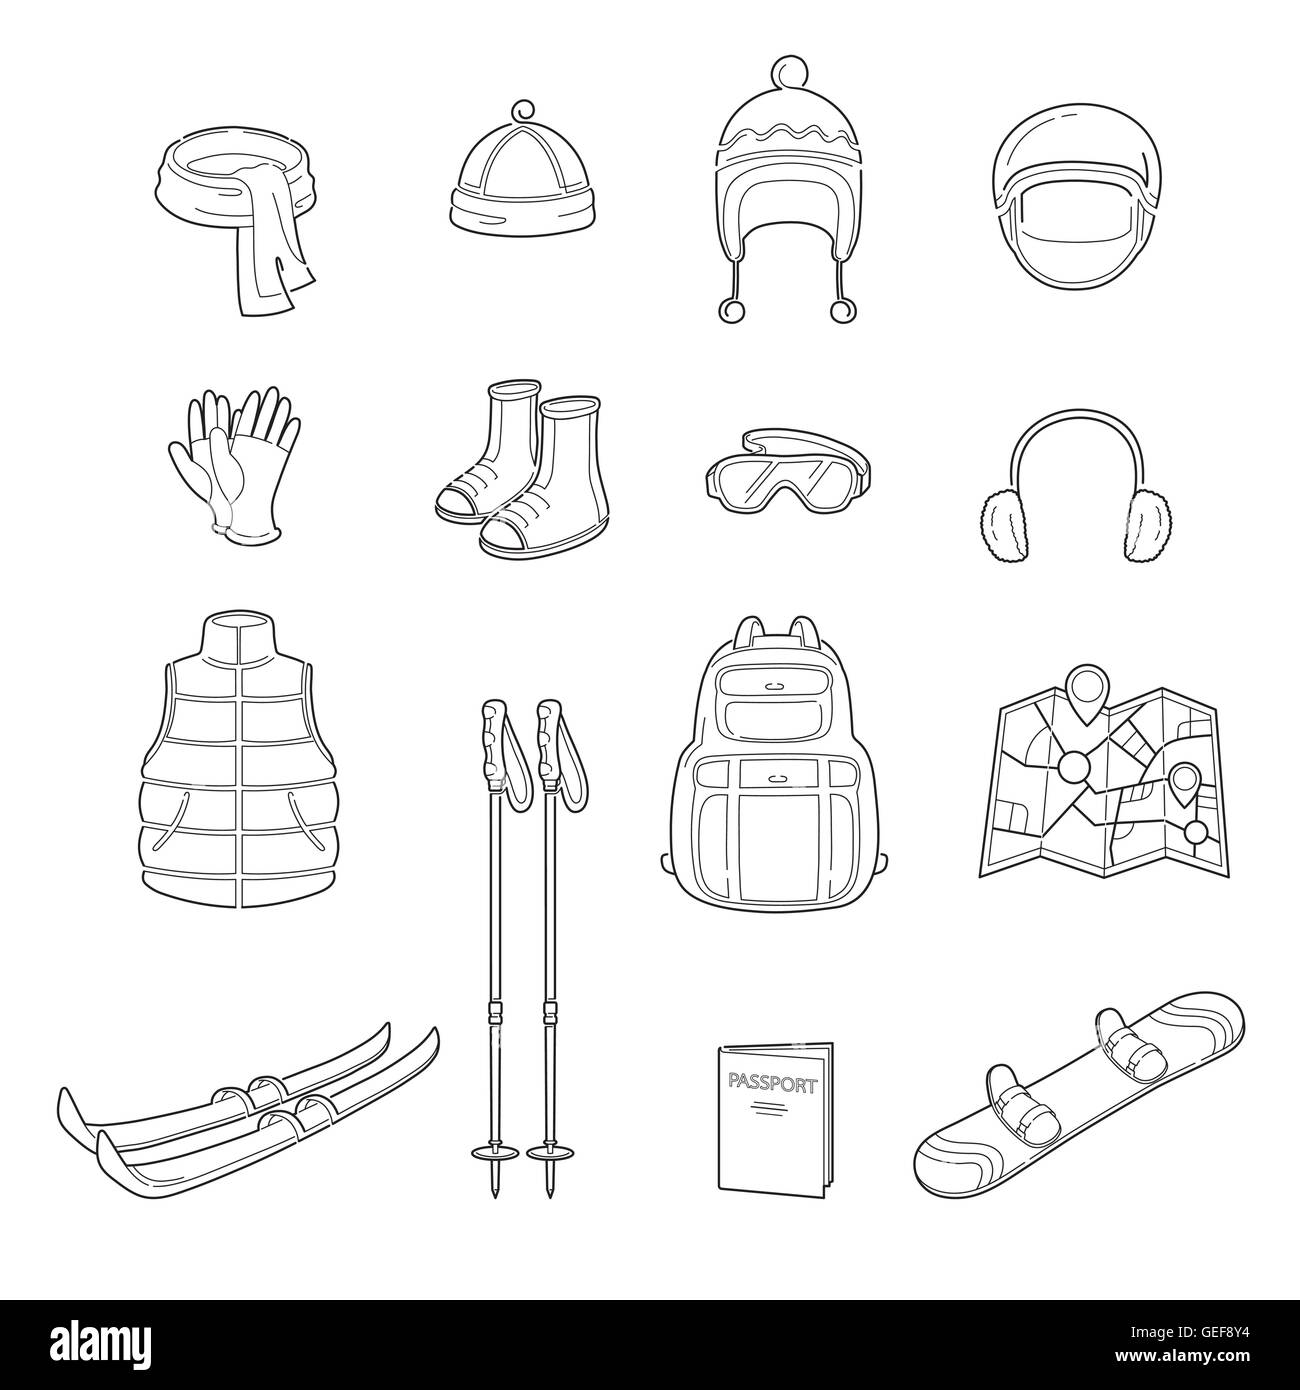 Winter Equipment Linear Icons Set, Season, Vacation, holiday, Object, Activity, Travel Stock Vector